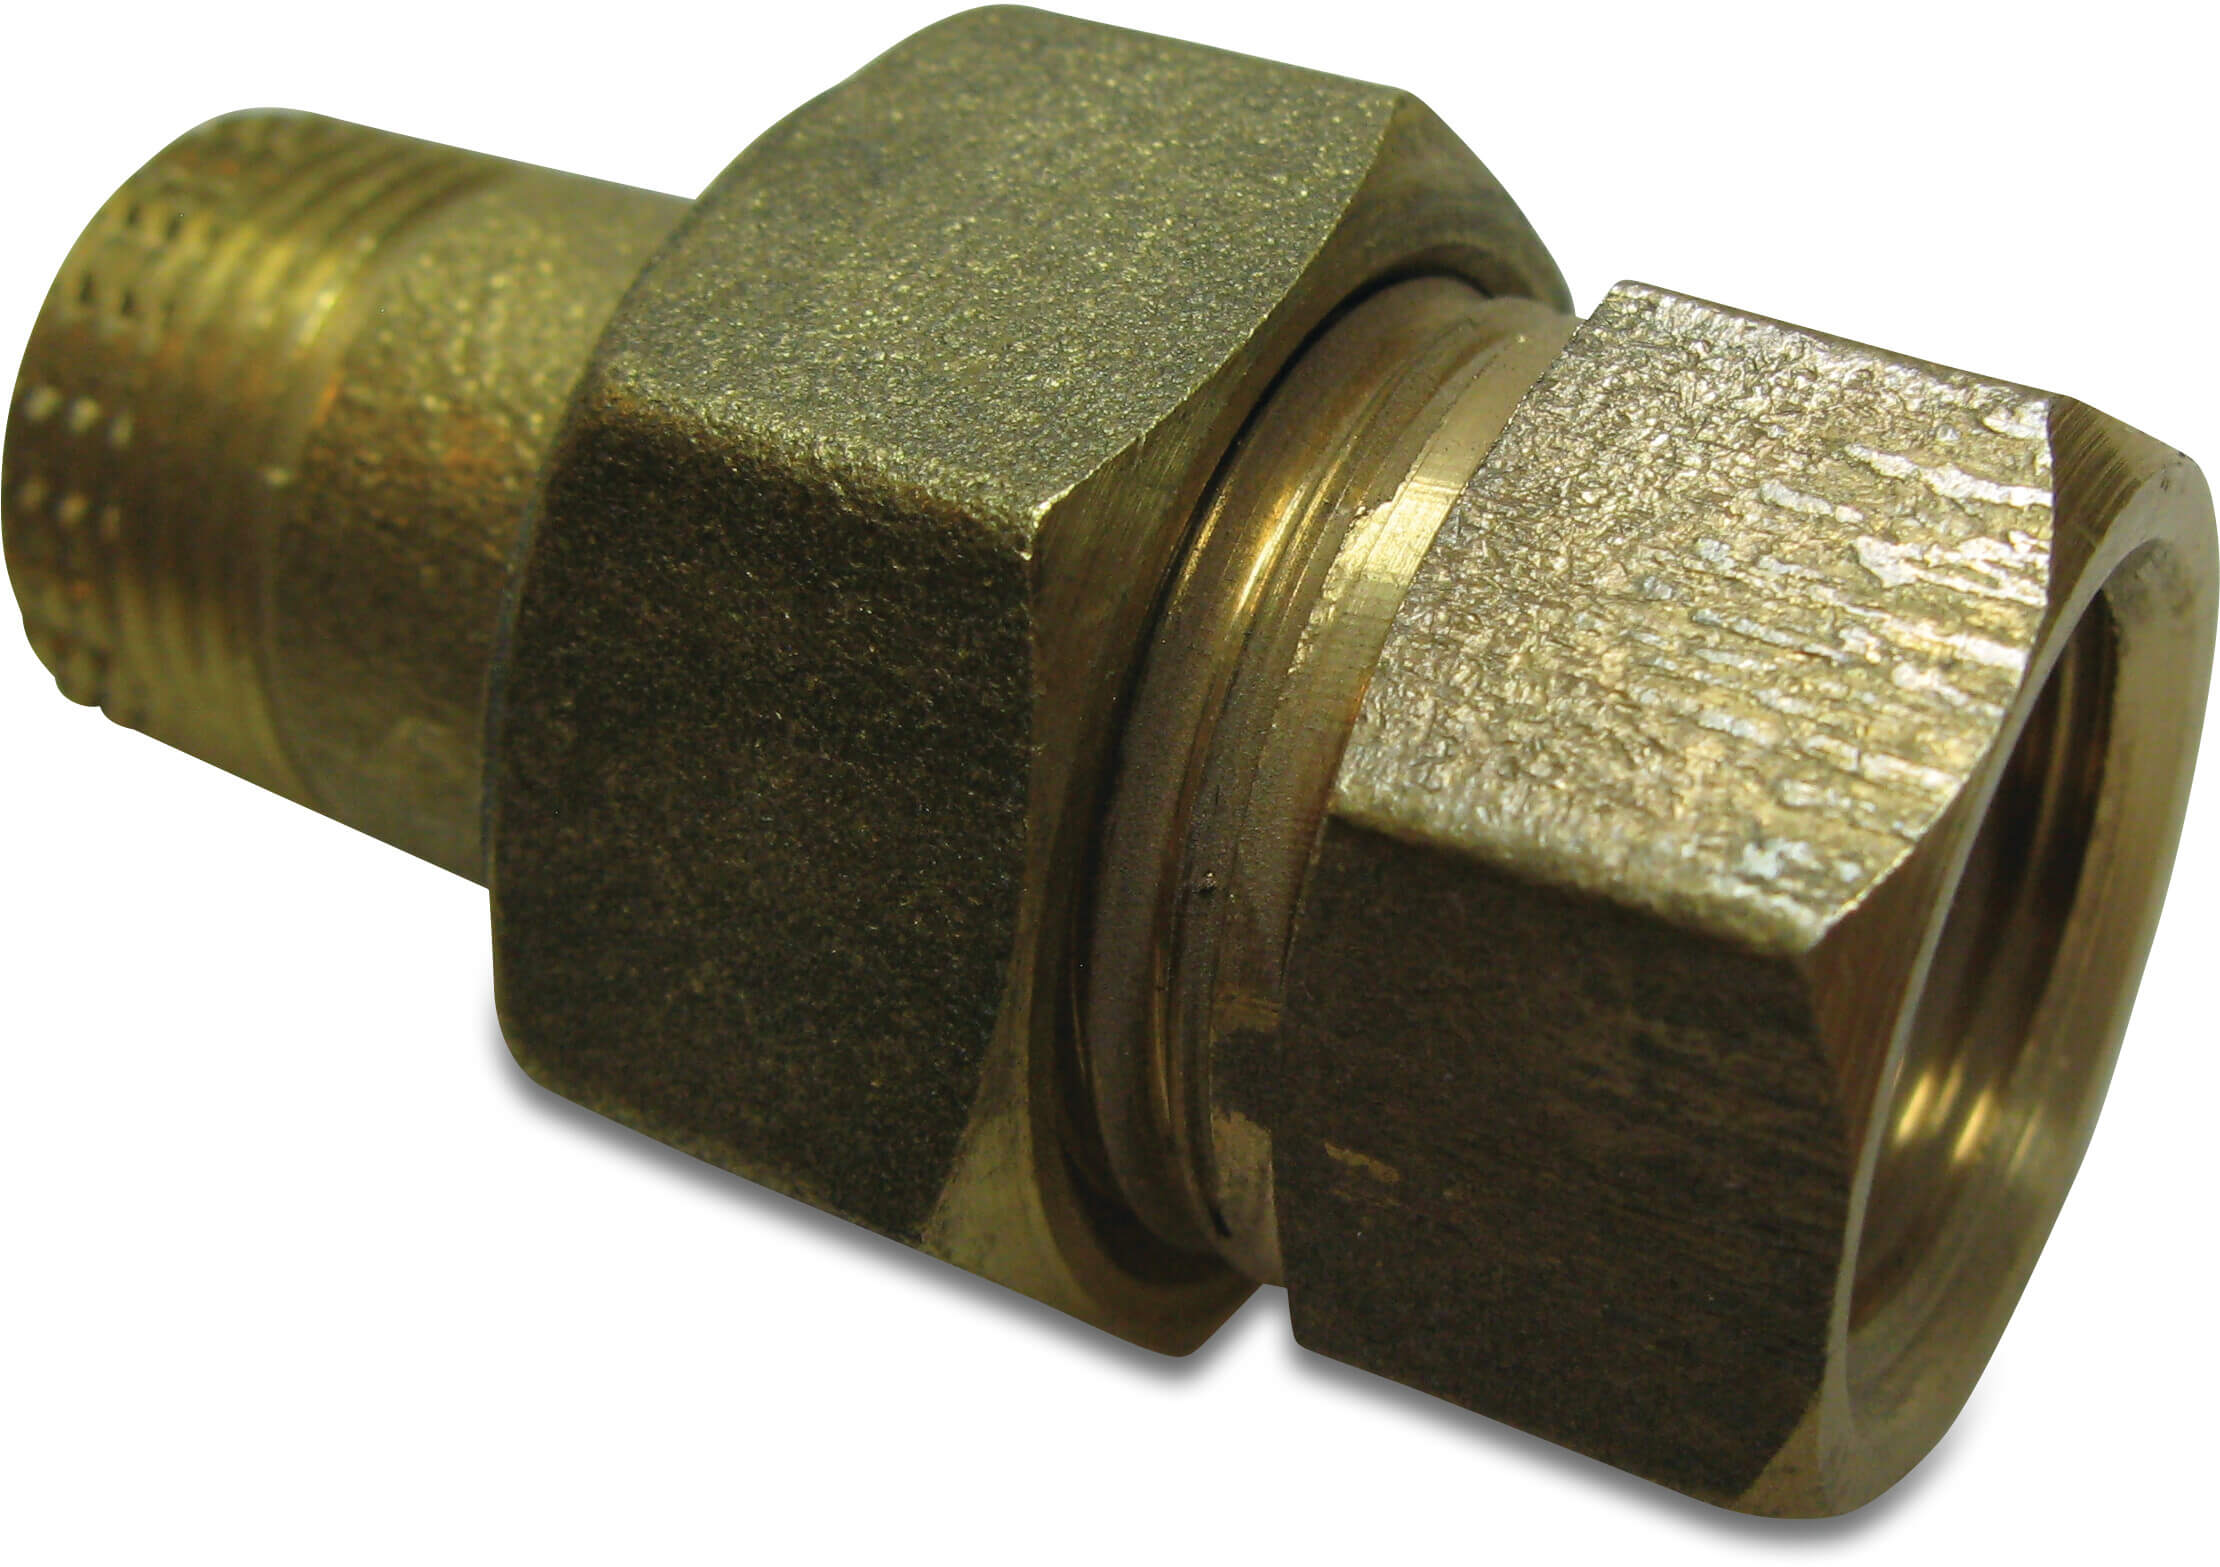 Nr. 341 Union coupler bronze 1/2" female thread x male thread 16bar type conical